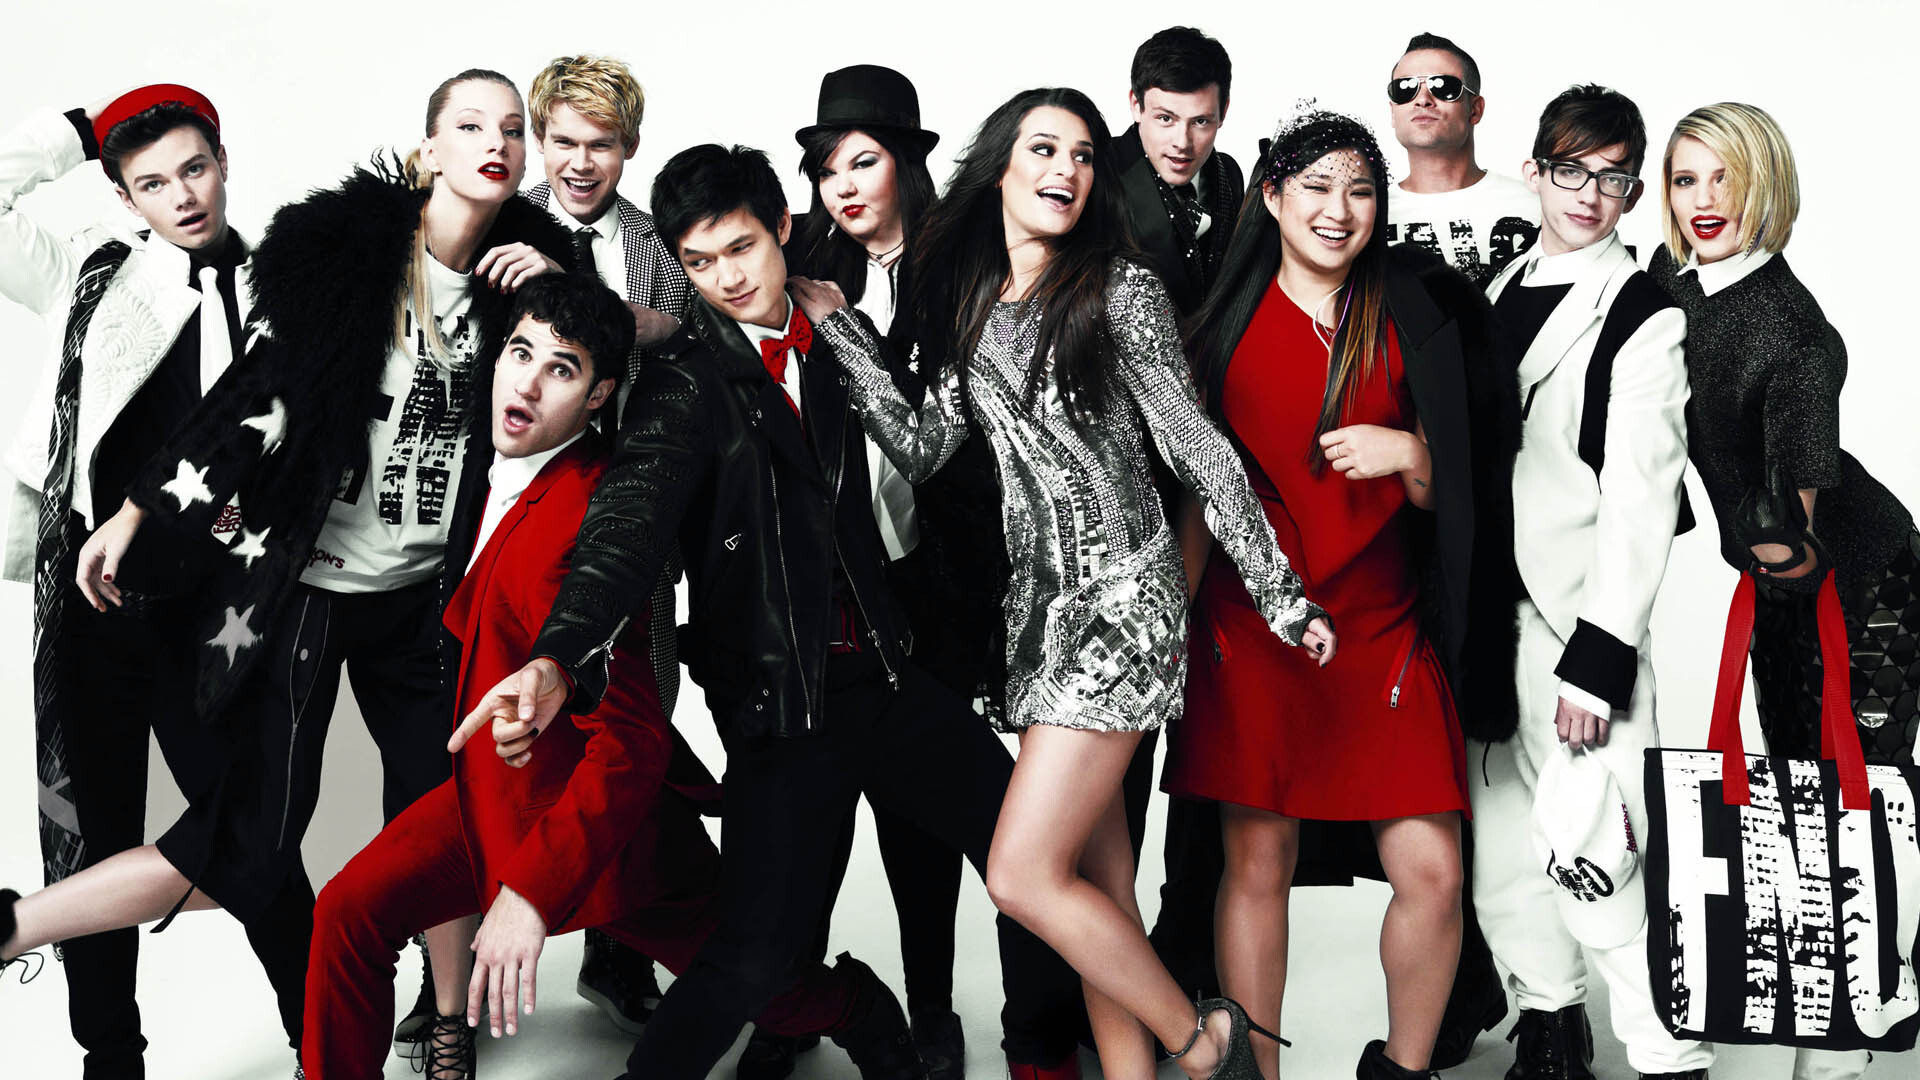 Glee (TV series): Blaine Anderson, Mike Chang, Sam Evans, Lauren Zizes, Brittany Pierce. 1920x1080 Full HD Wallpaper.